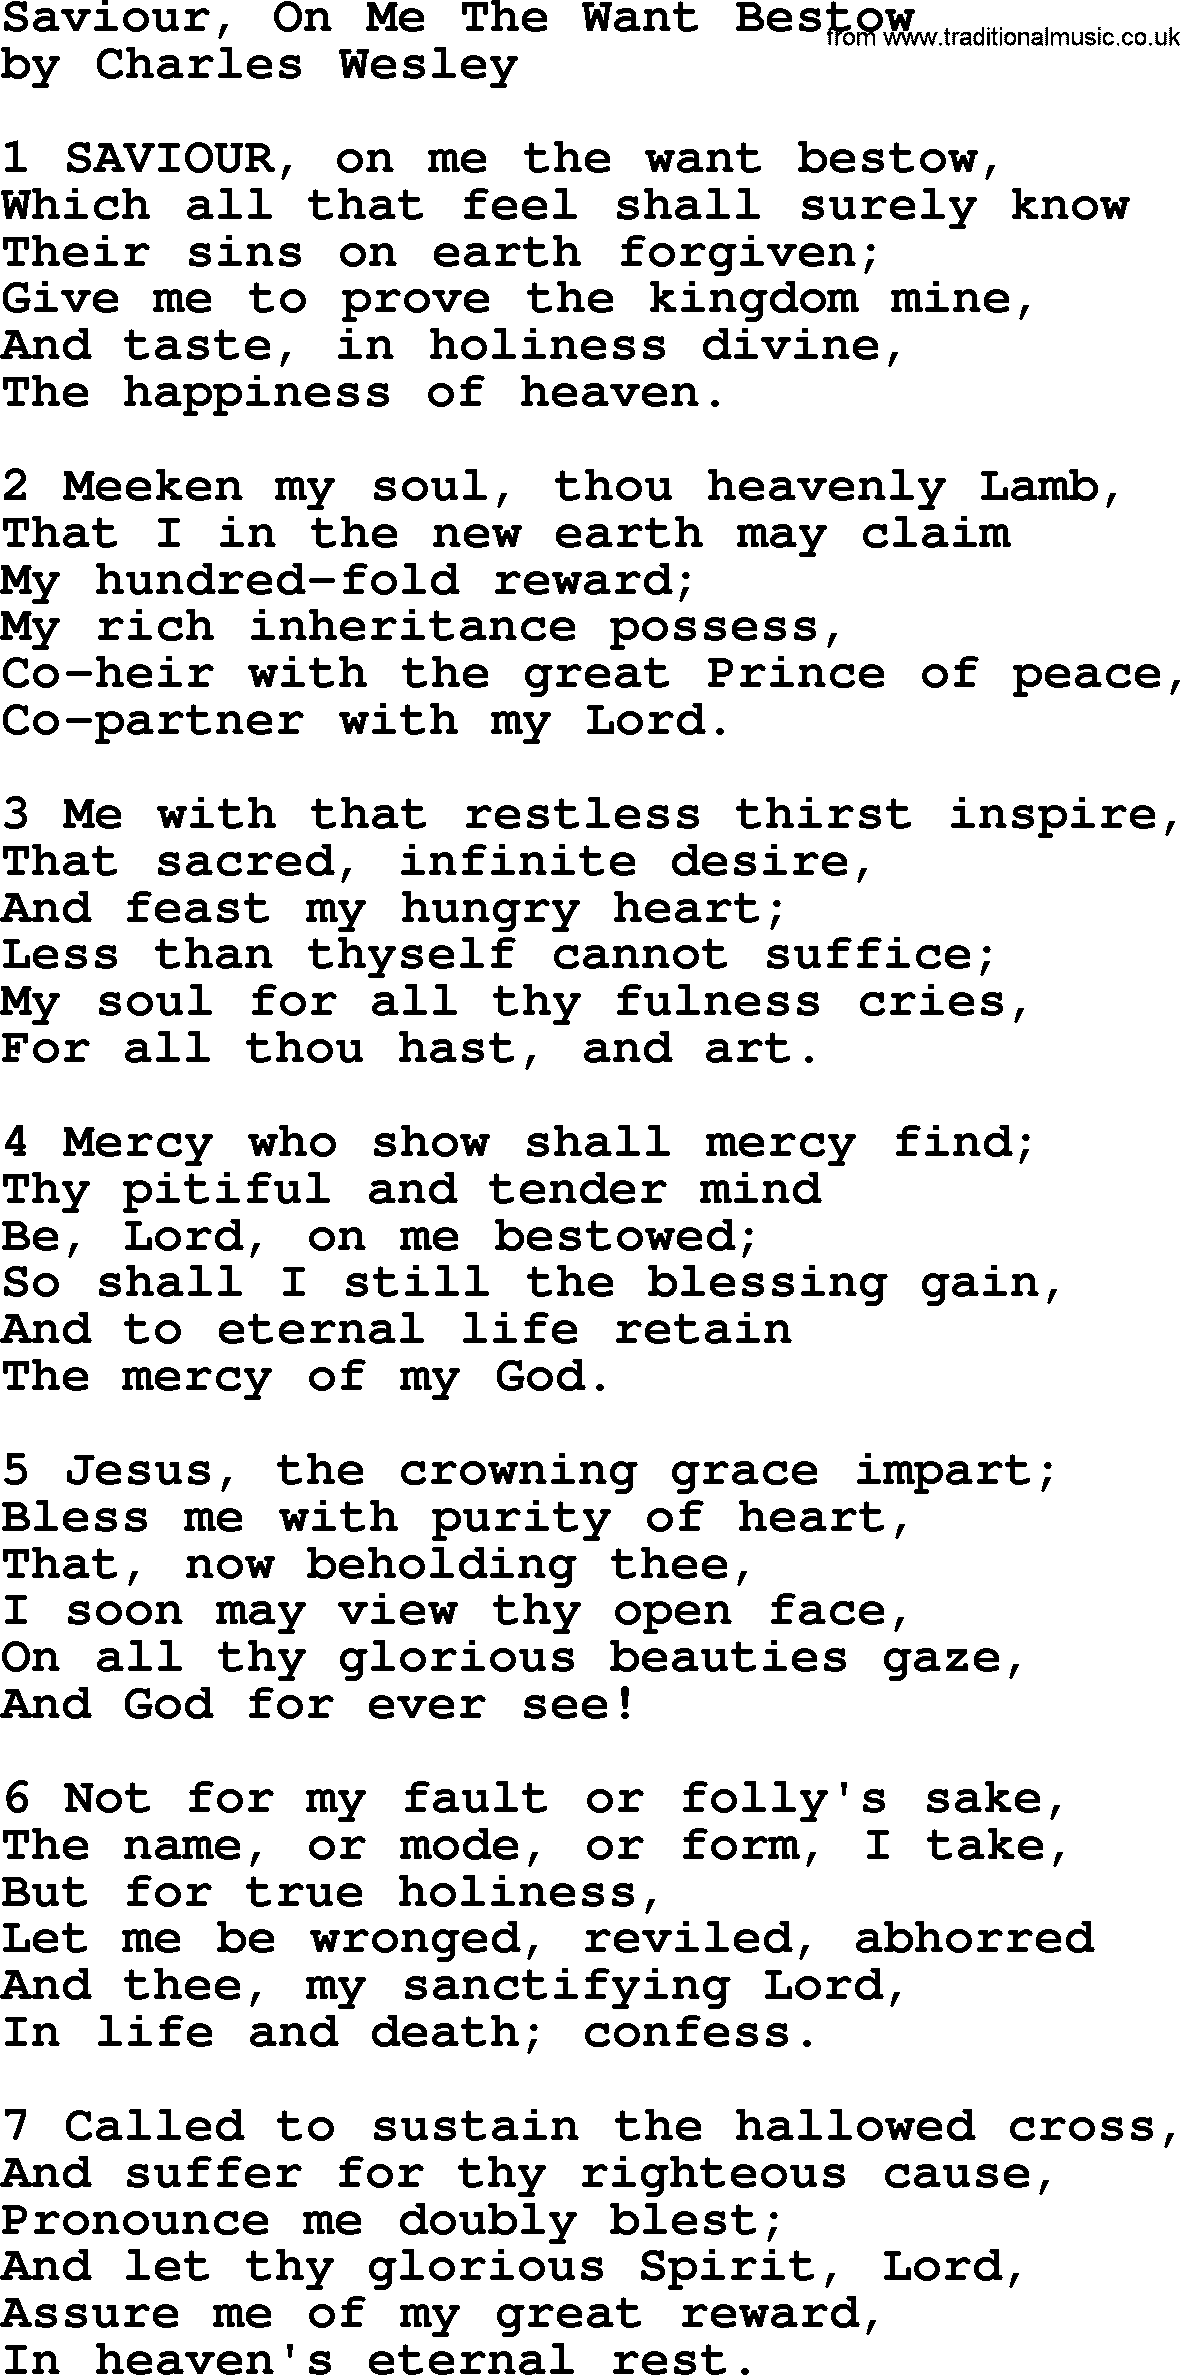 Charles Wesley hymn: Saviour, On Me The Want Bestow, lyrics